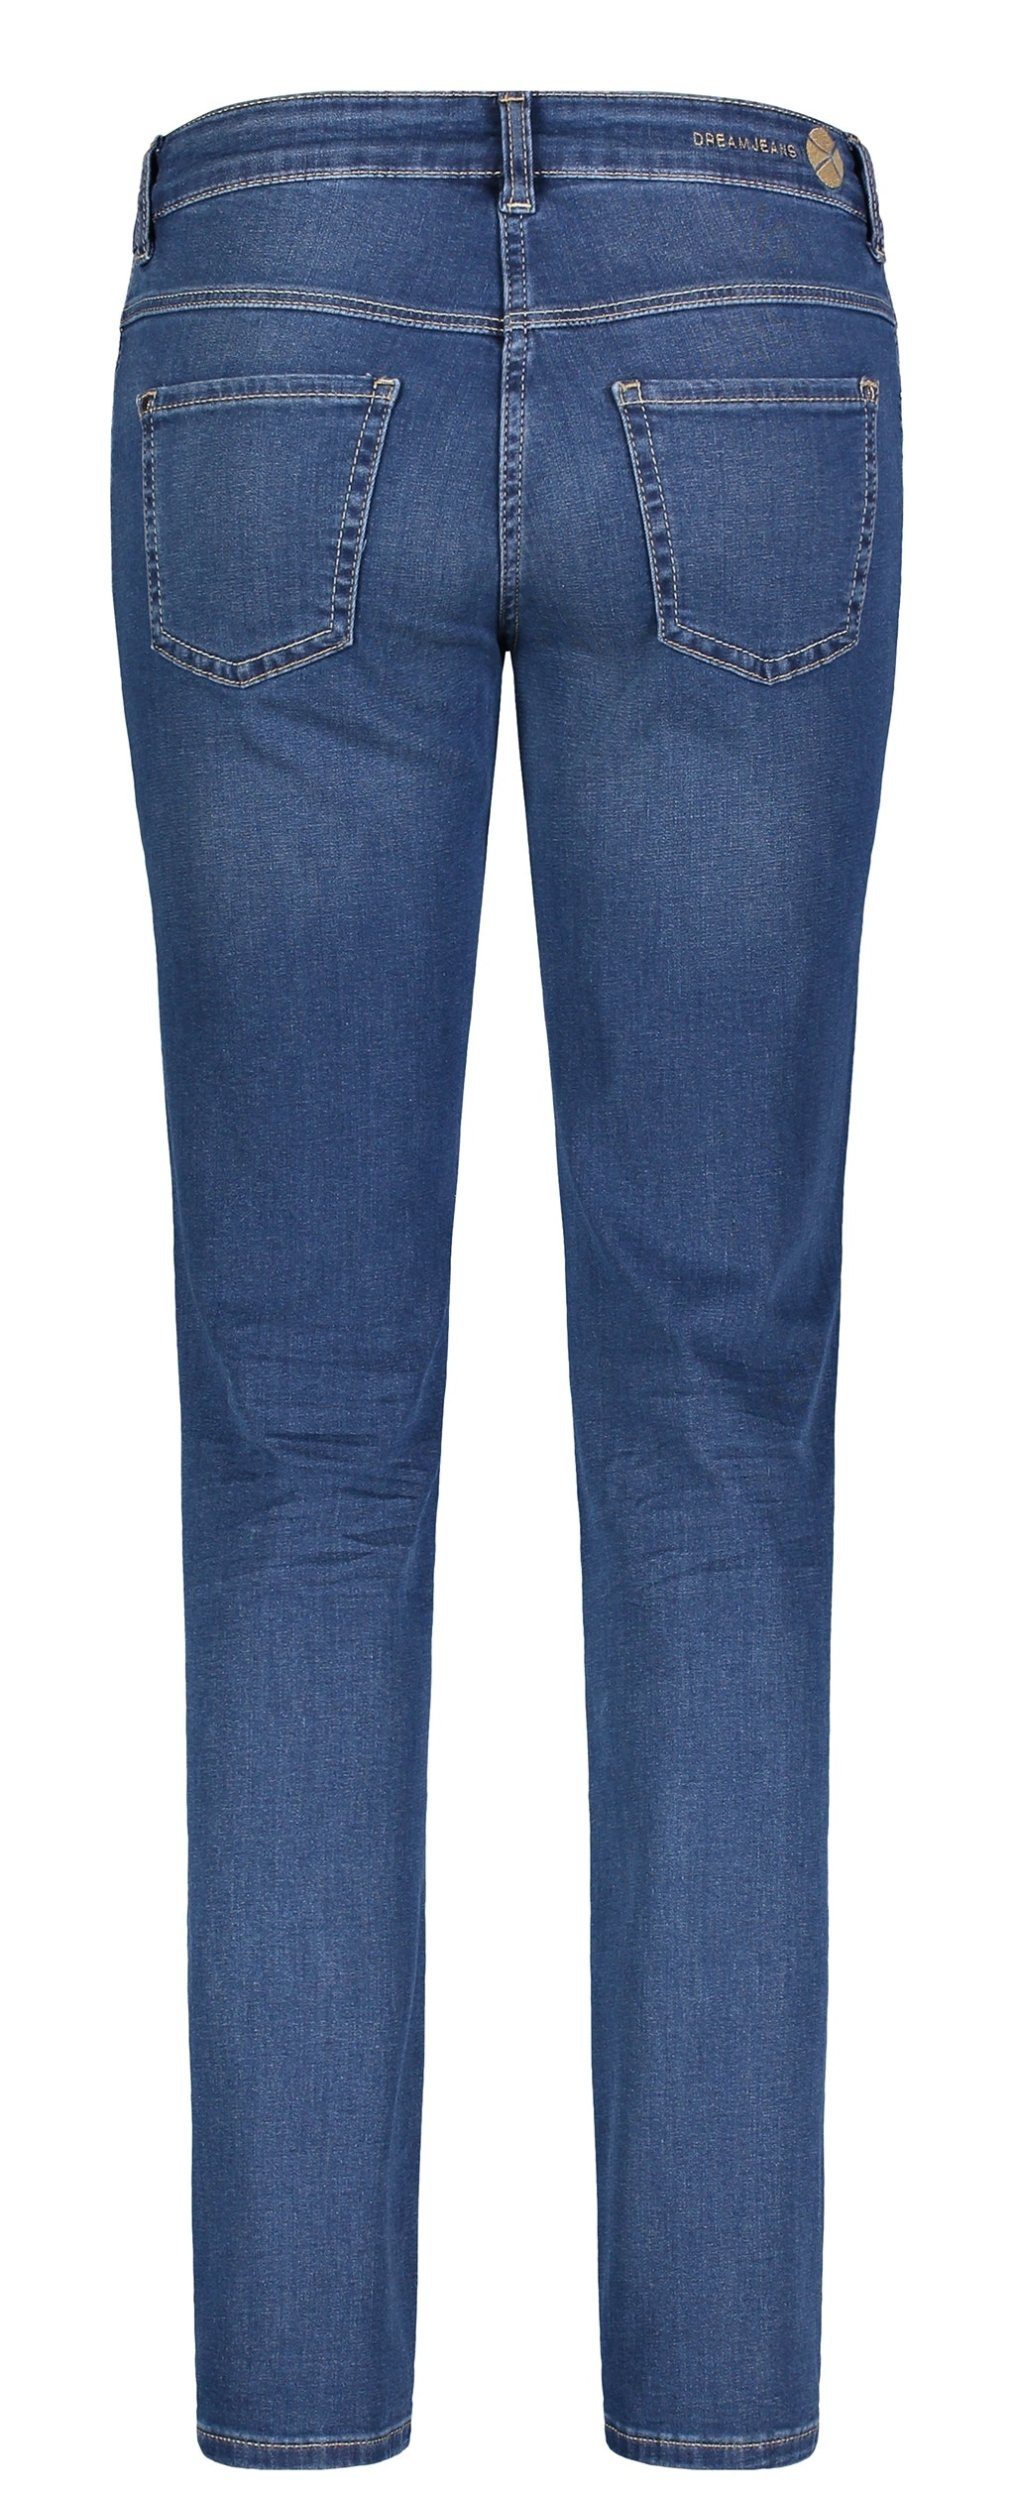 Dream JEANS Blau MAC DREAM, - denim 5-Pocket-Jeans